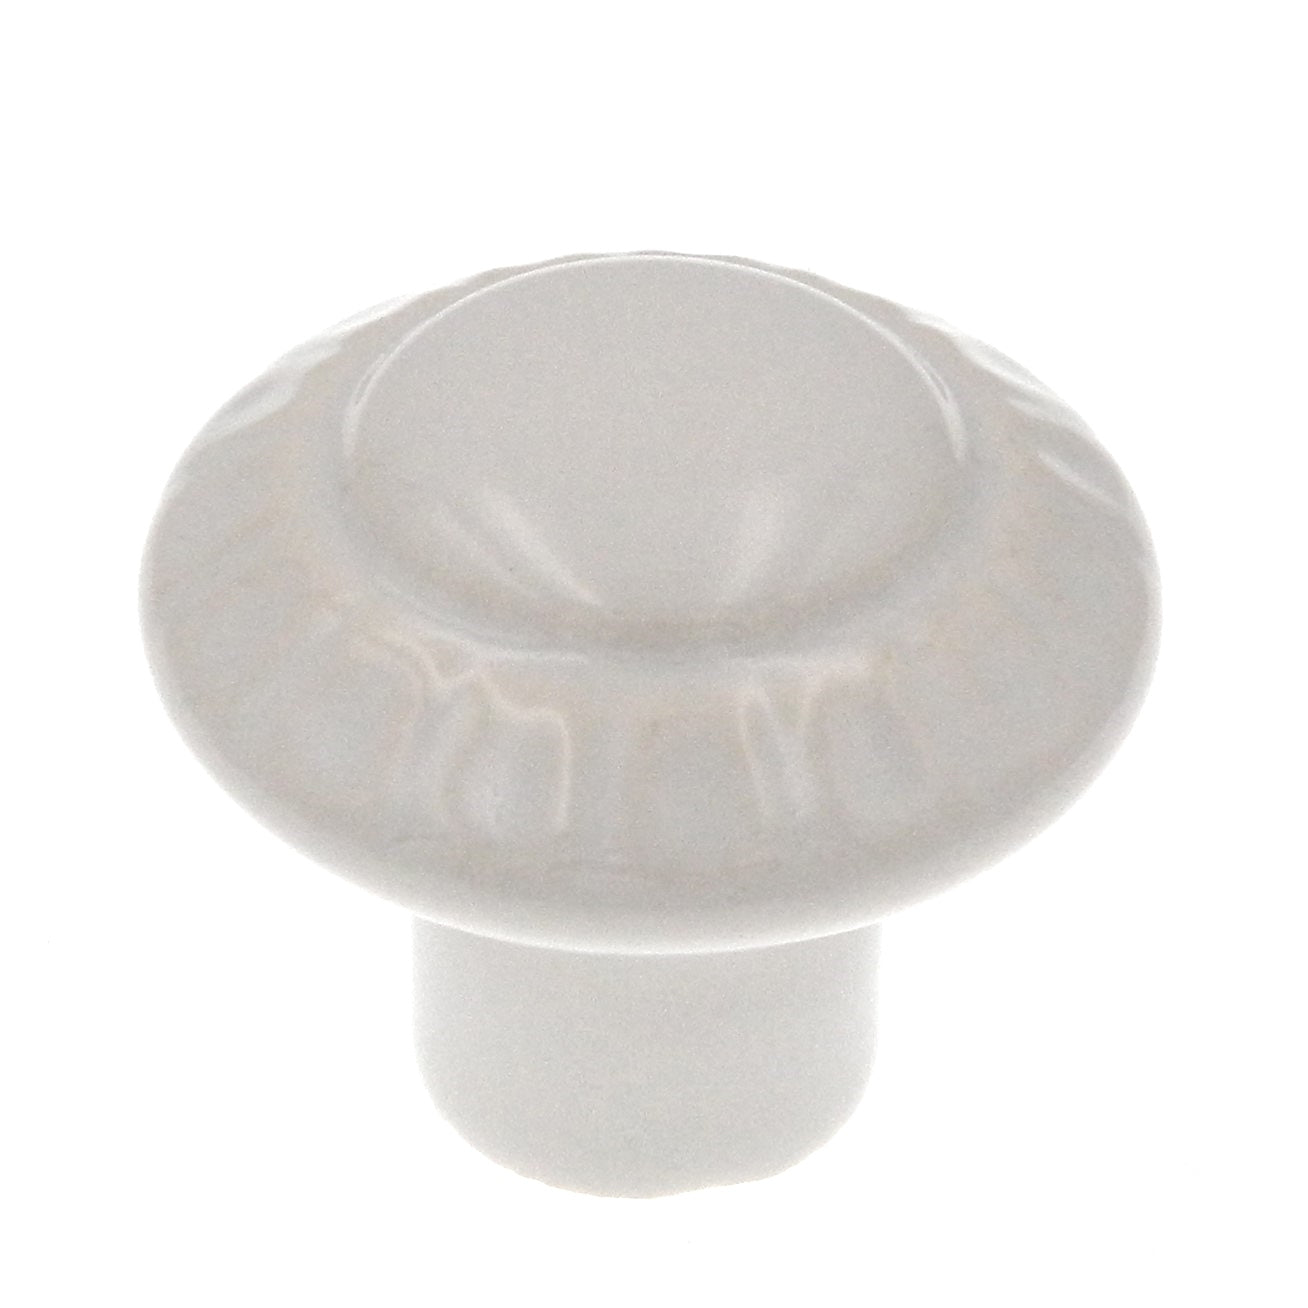 Amerock BP1322-W White Colour Washed Ceramic 1 3/8" Mushroom Cabinet Knobs